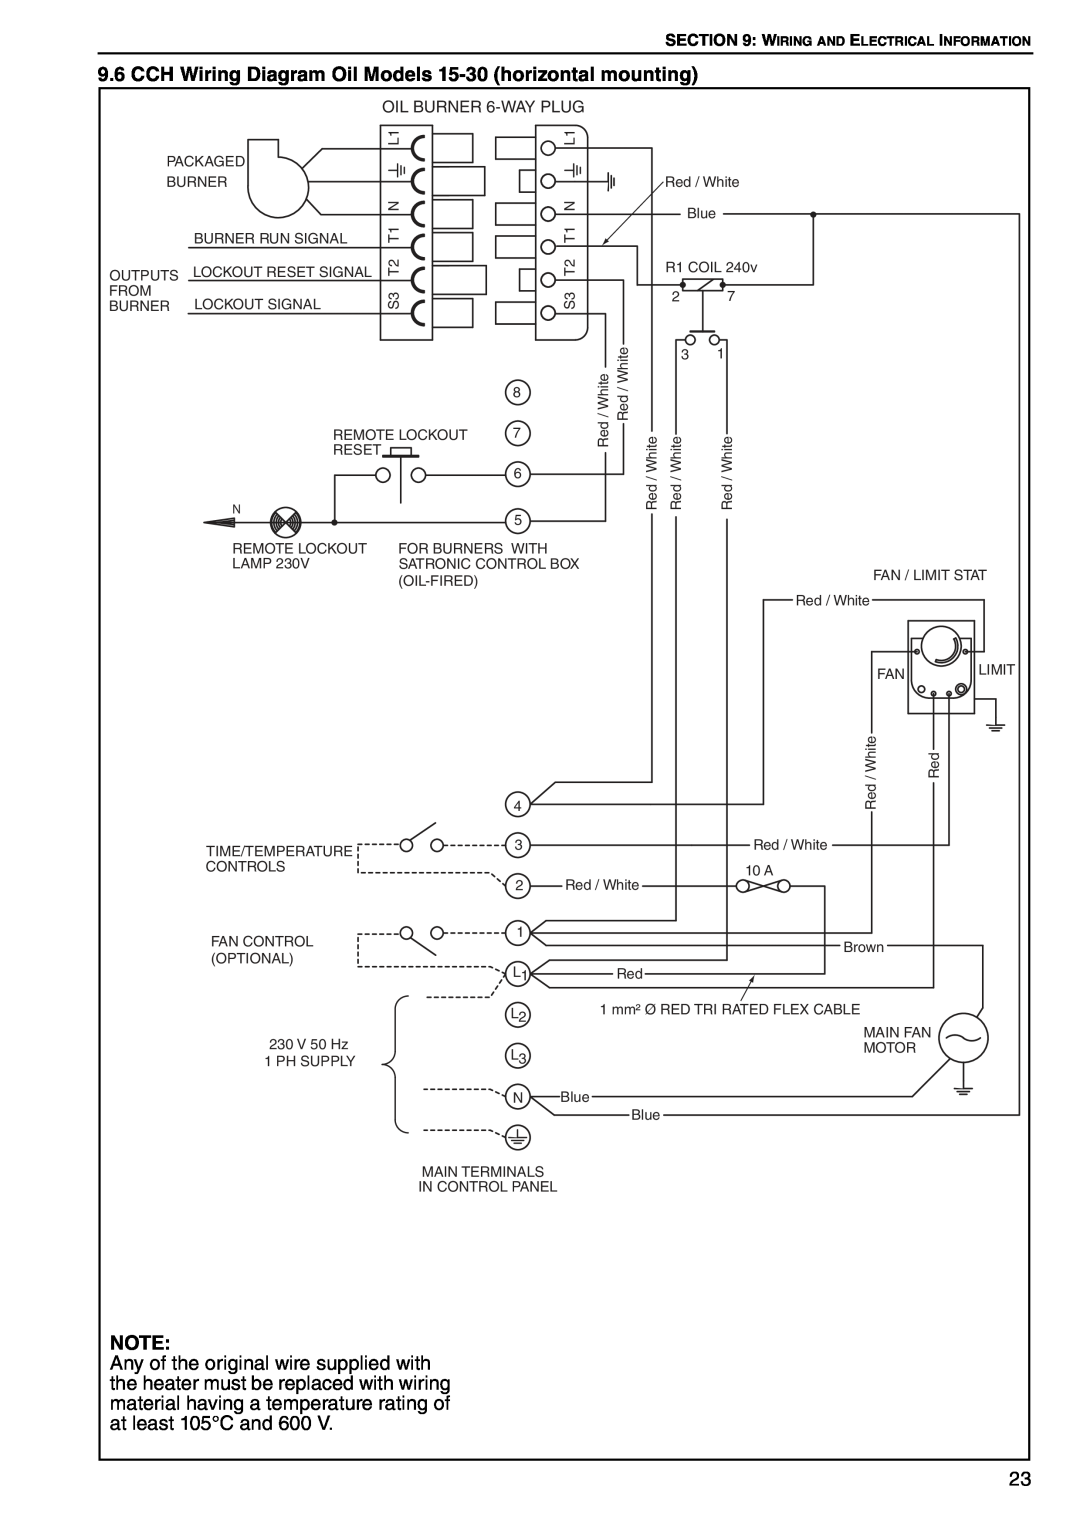 Roberts Gorden POP-ECA/PGP-ECA 015 to 0100 CCH Wiring Diagram Oil Models 15-30 horizontal mounting, OIL BURNER 6-WAY PLUG 